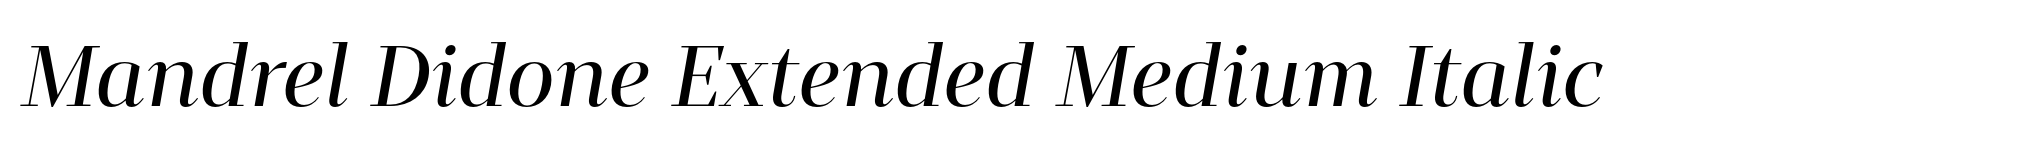 Mandrel Didone Extended Medium Italic image